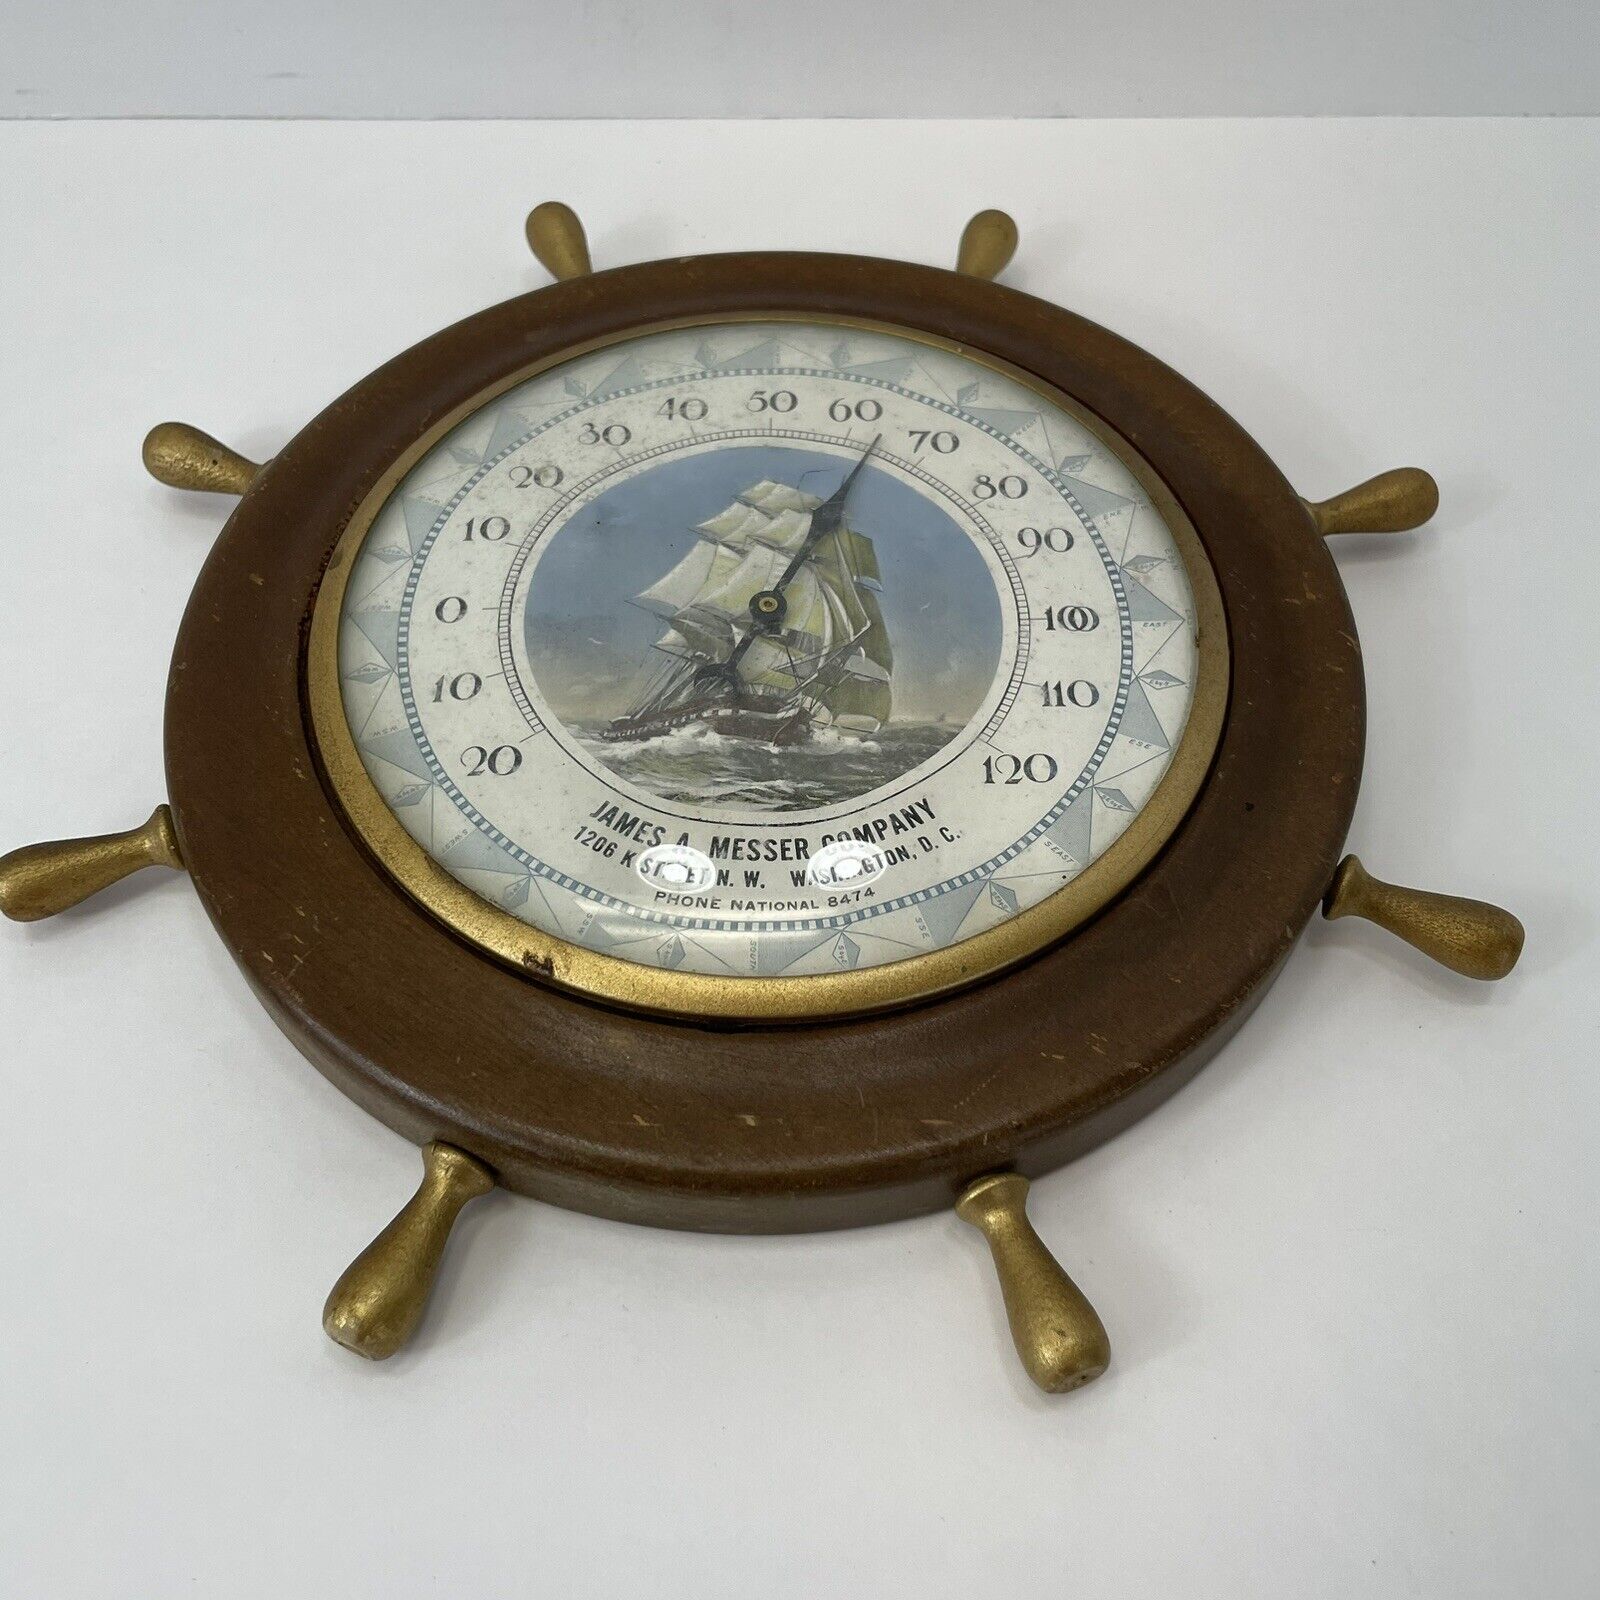 Vintage Thermometer Ship Wheel James A Messer Company Washington DC Wood Working